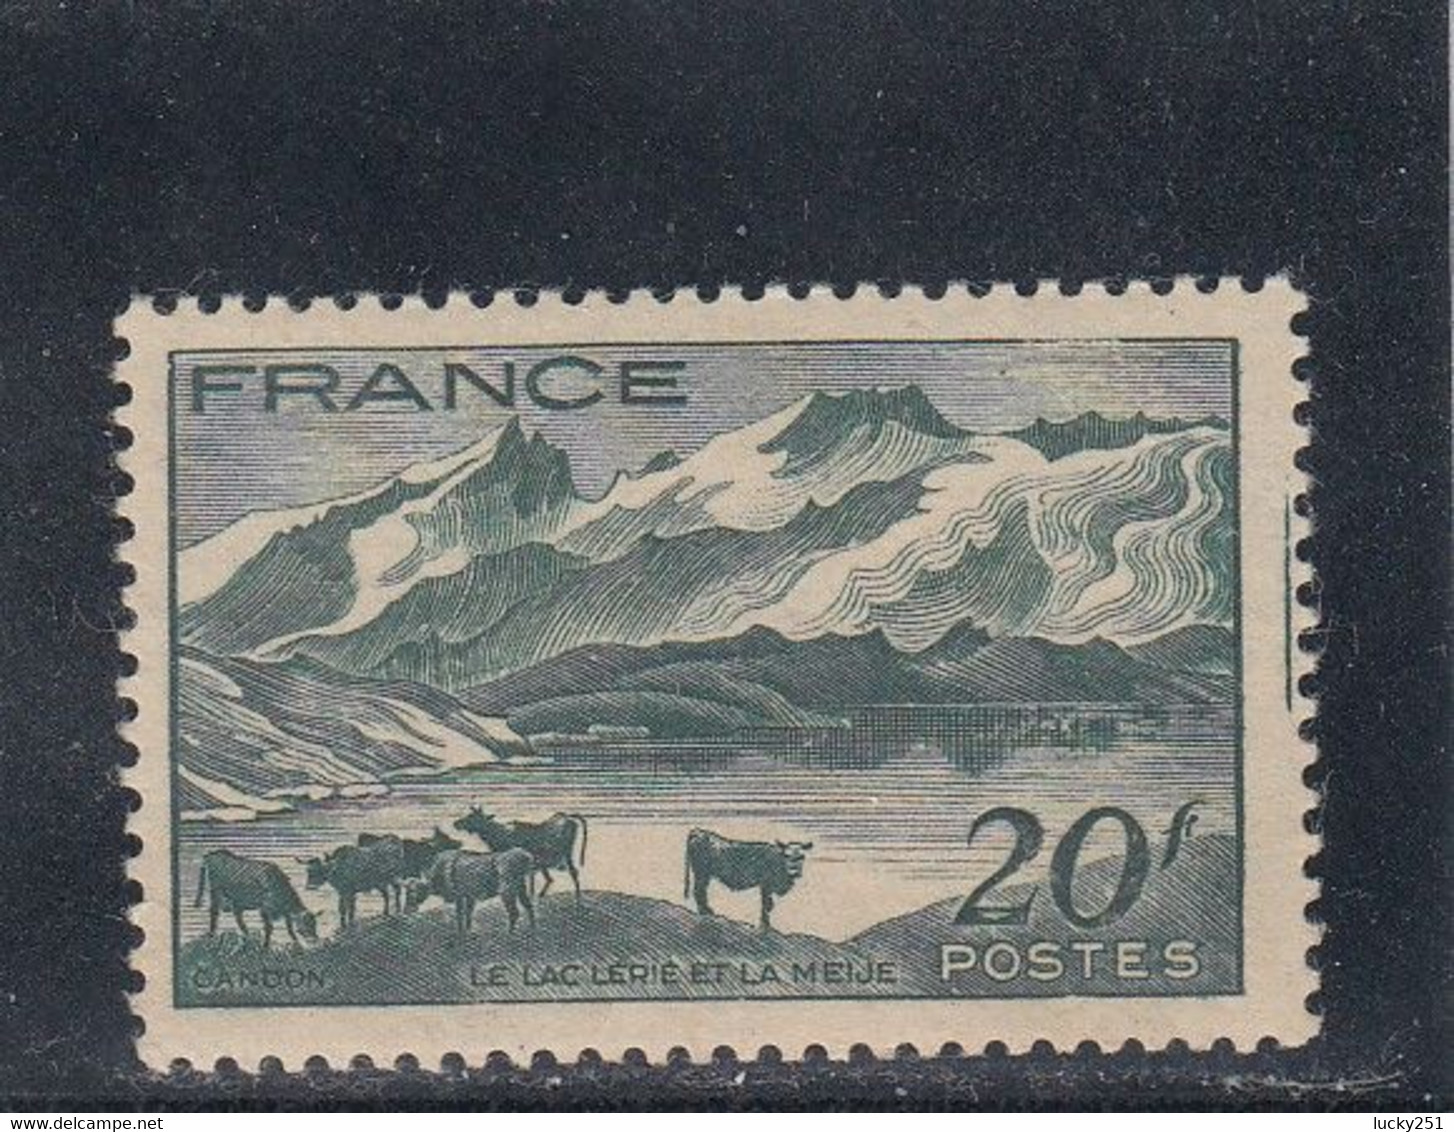 France - Année 1943 - Neuf** - N°YT 582** - Paysage Du Dauphiné - Ongebruikt